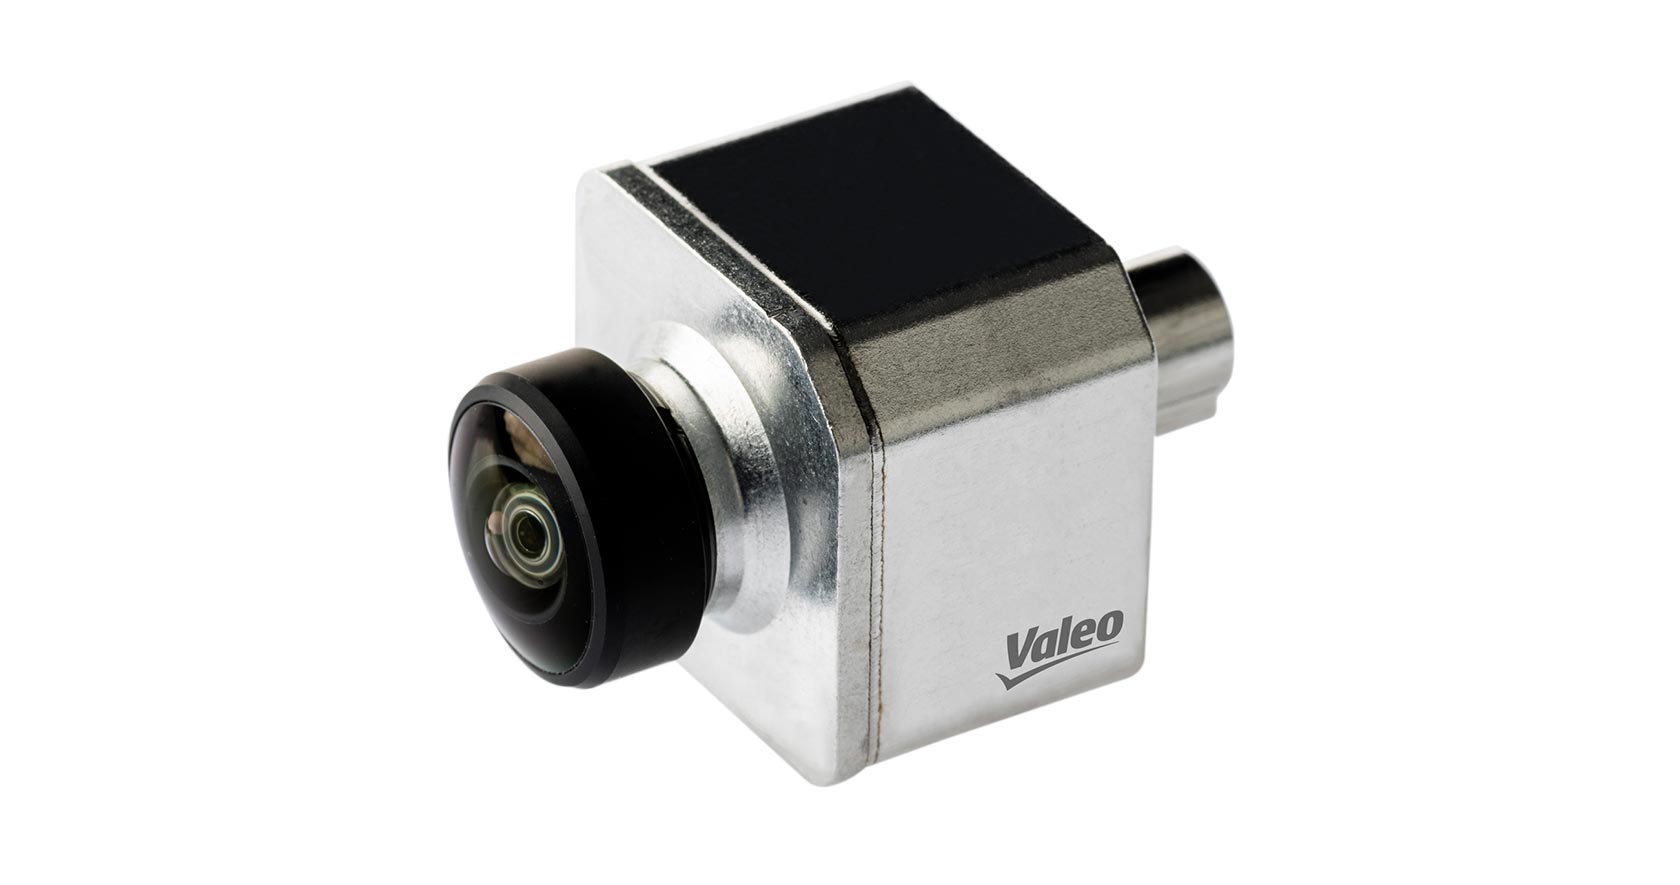 Valeo 2MP Fisheye BroadR-Reach Camera | AutonomouStuff